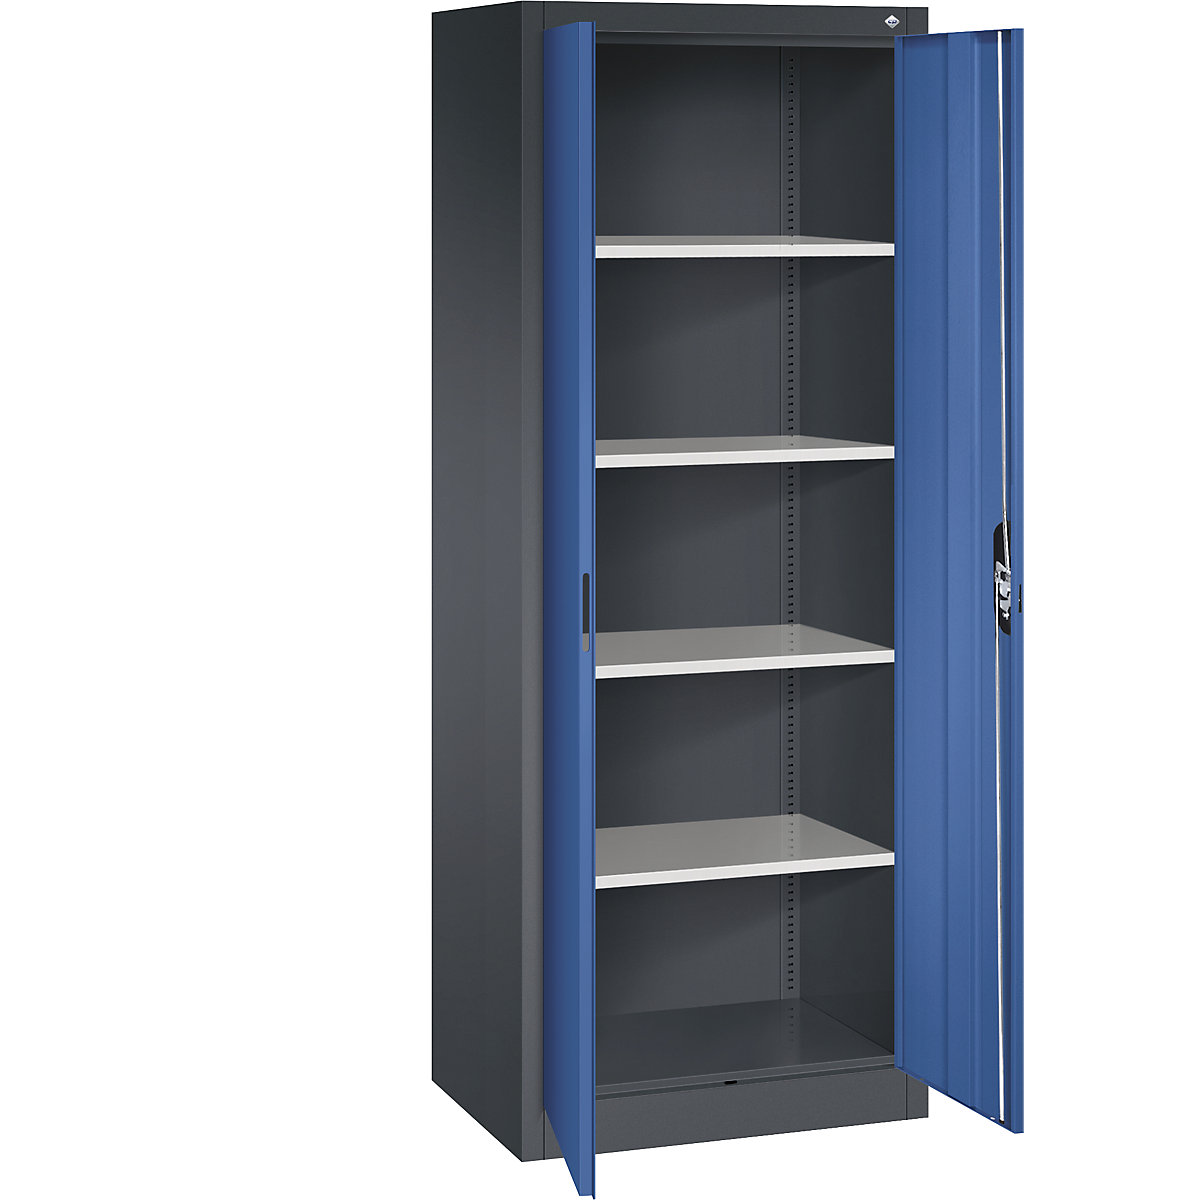 C+P – ACURADO universal cupboard, WxD 700 x 500 mm, black grey / gentian blue